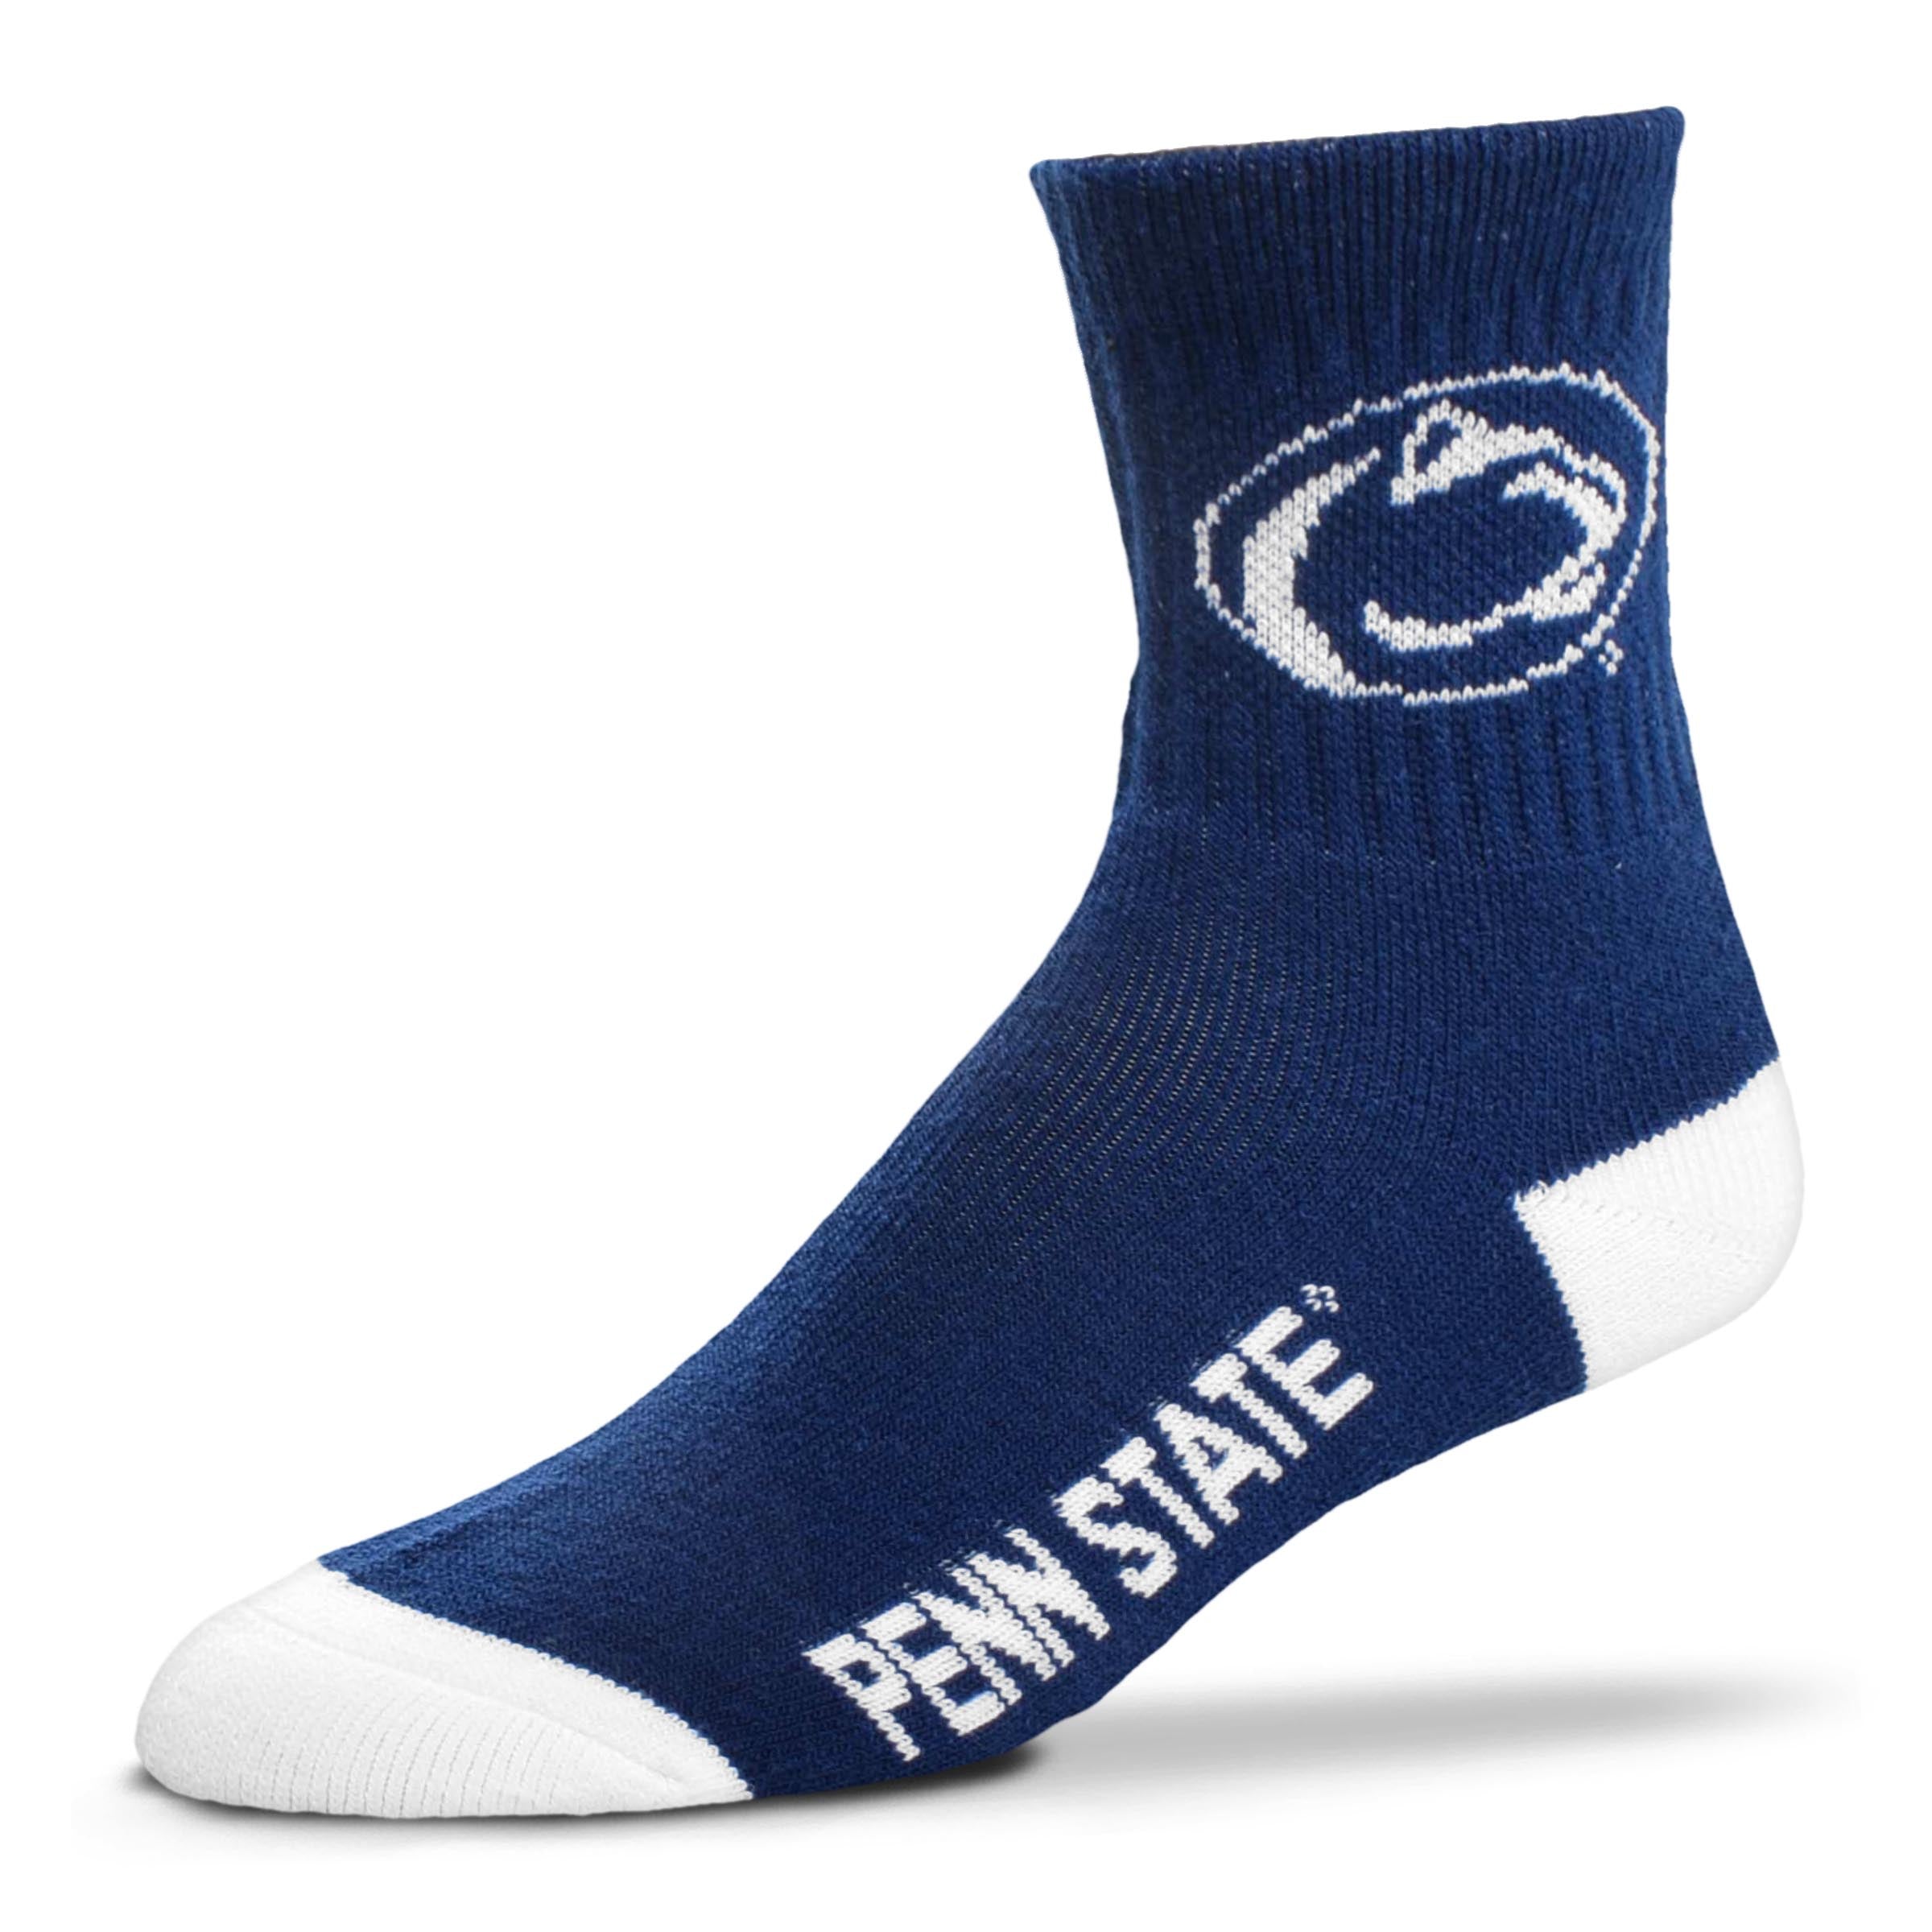 Penn State Team Crew Color Socks - Large